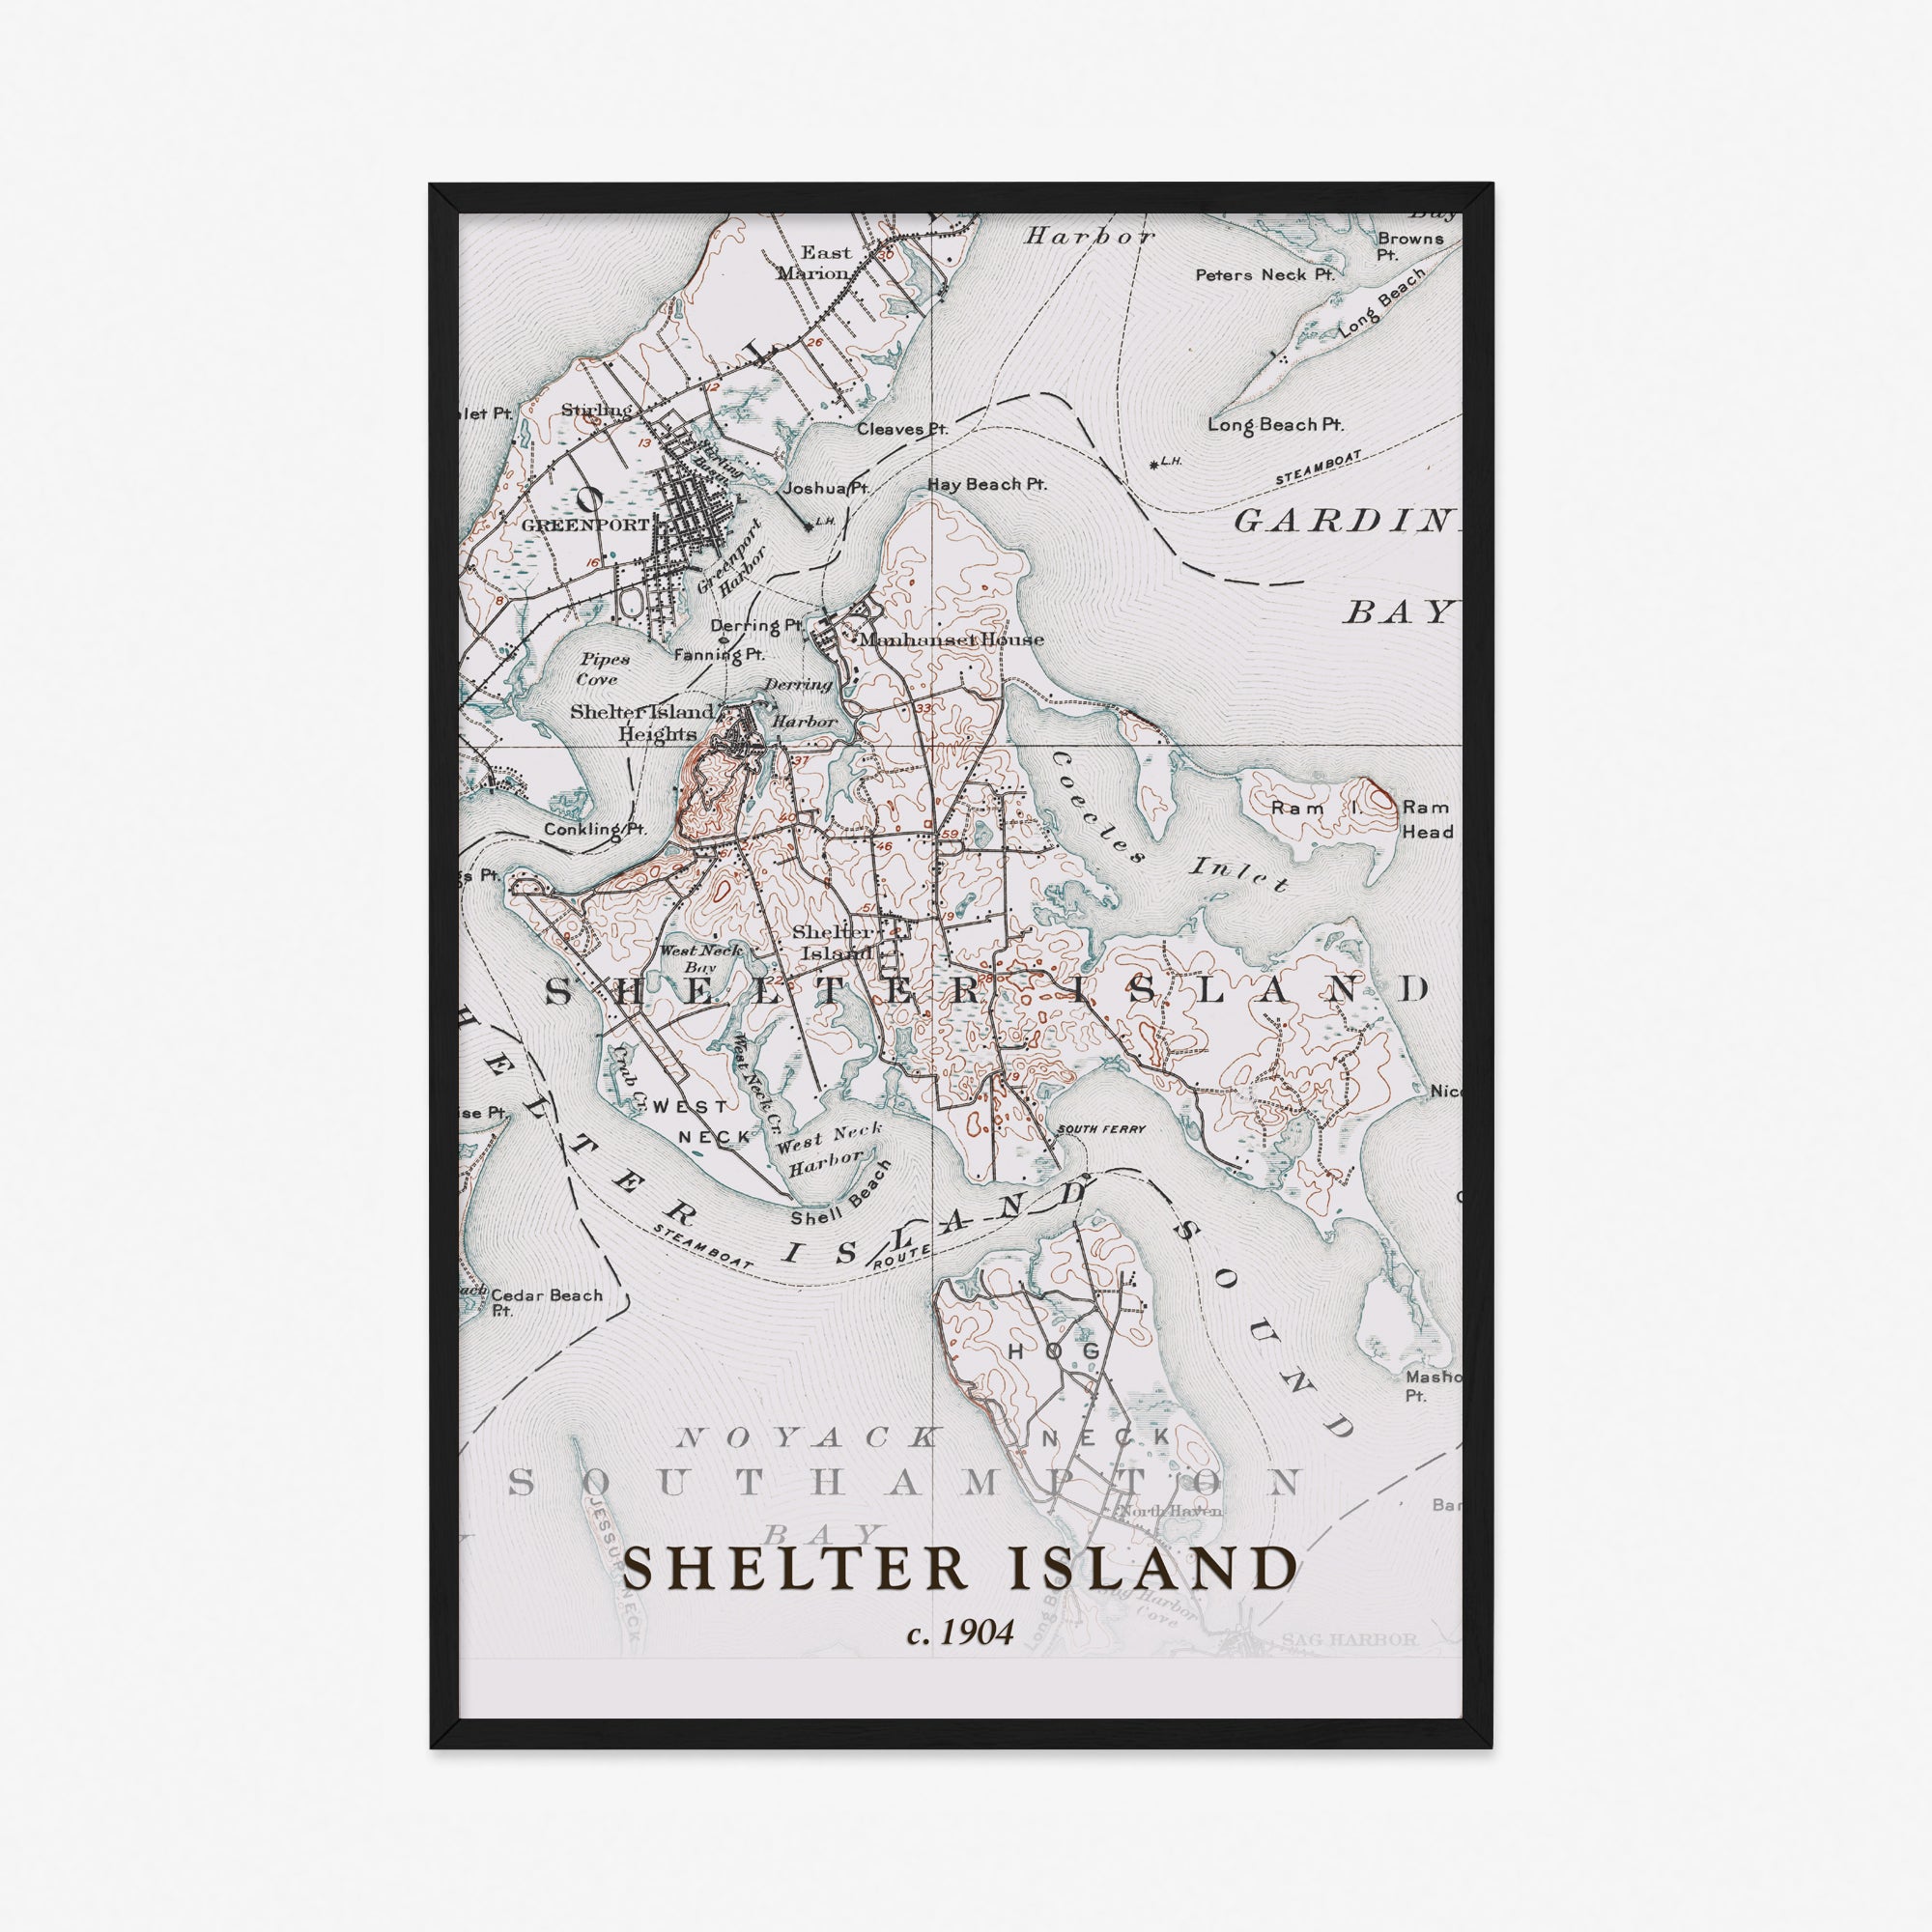 Shelter Island, NY - 1904 Topographic Map